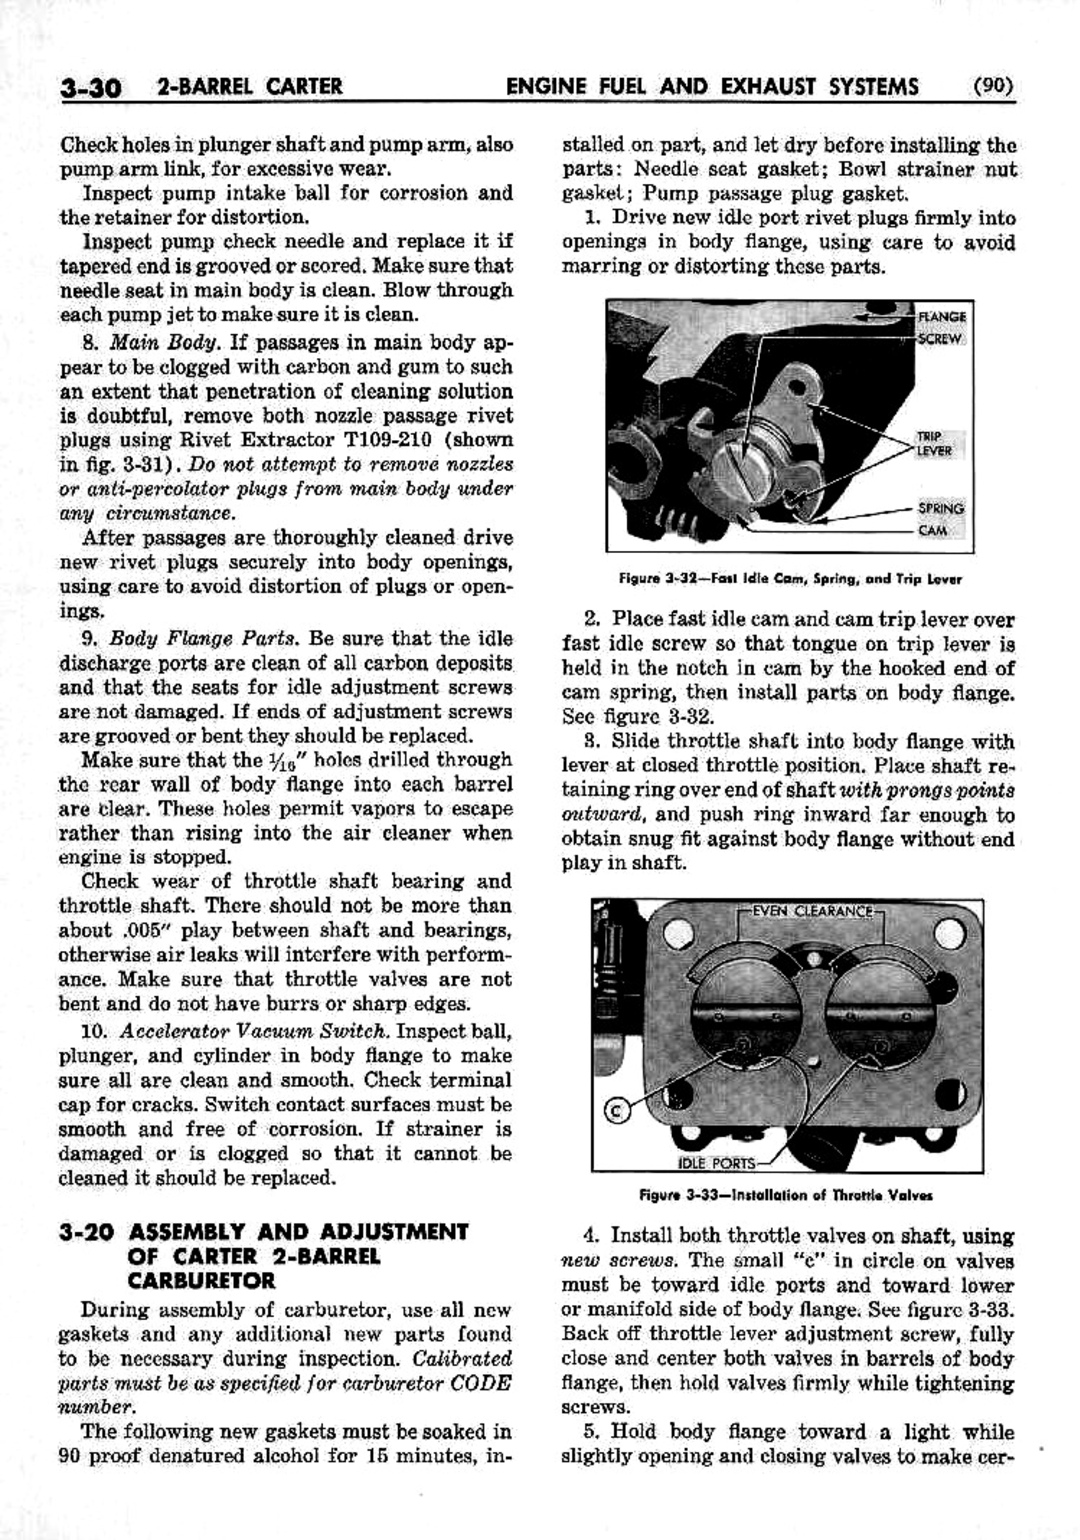 n_04 1953 Buick Shop Manual - Engine Fuel & Exhaust-030-030.jpg